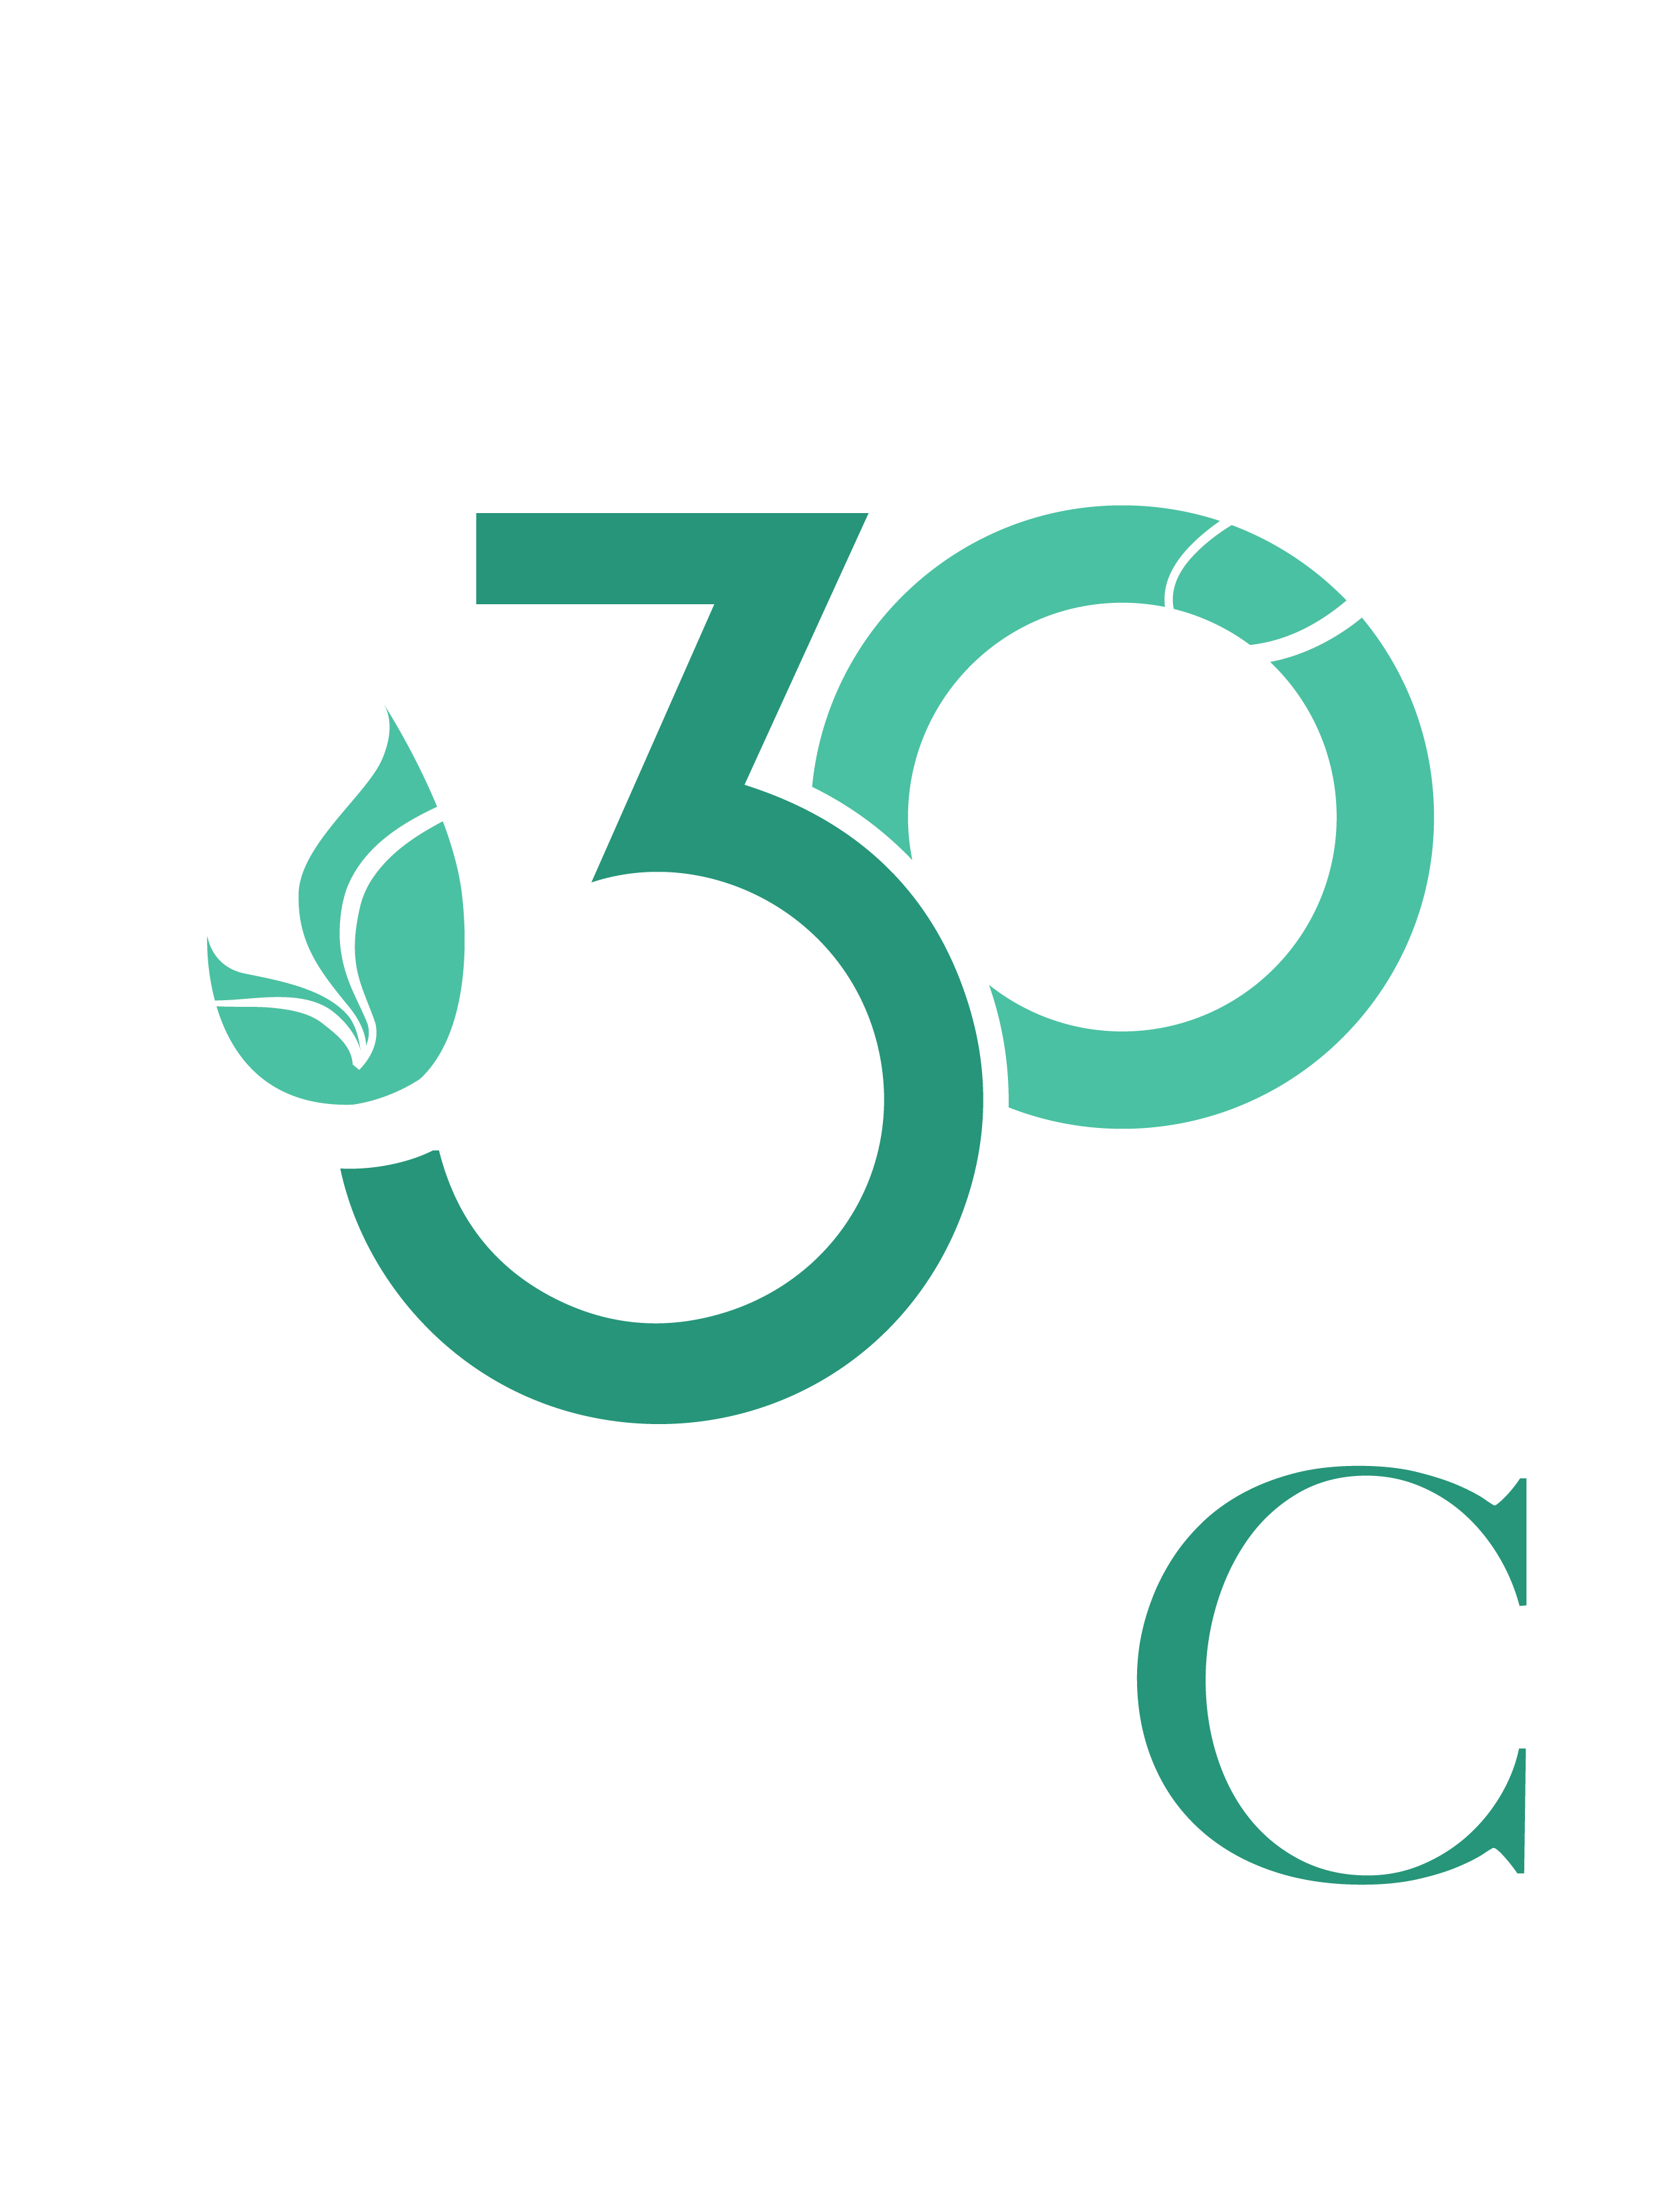 Women’s Resource Center of Hancock County